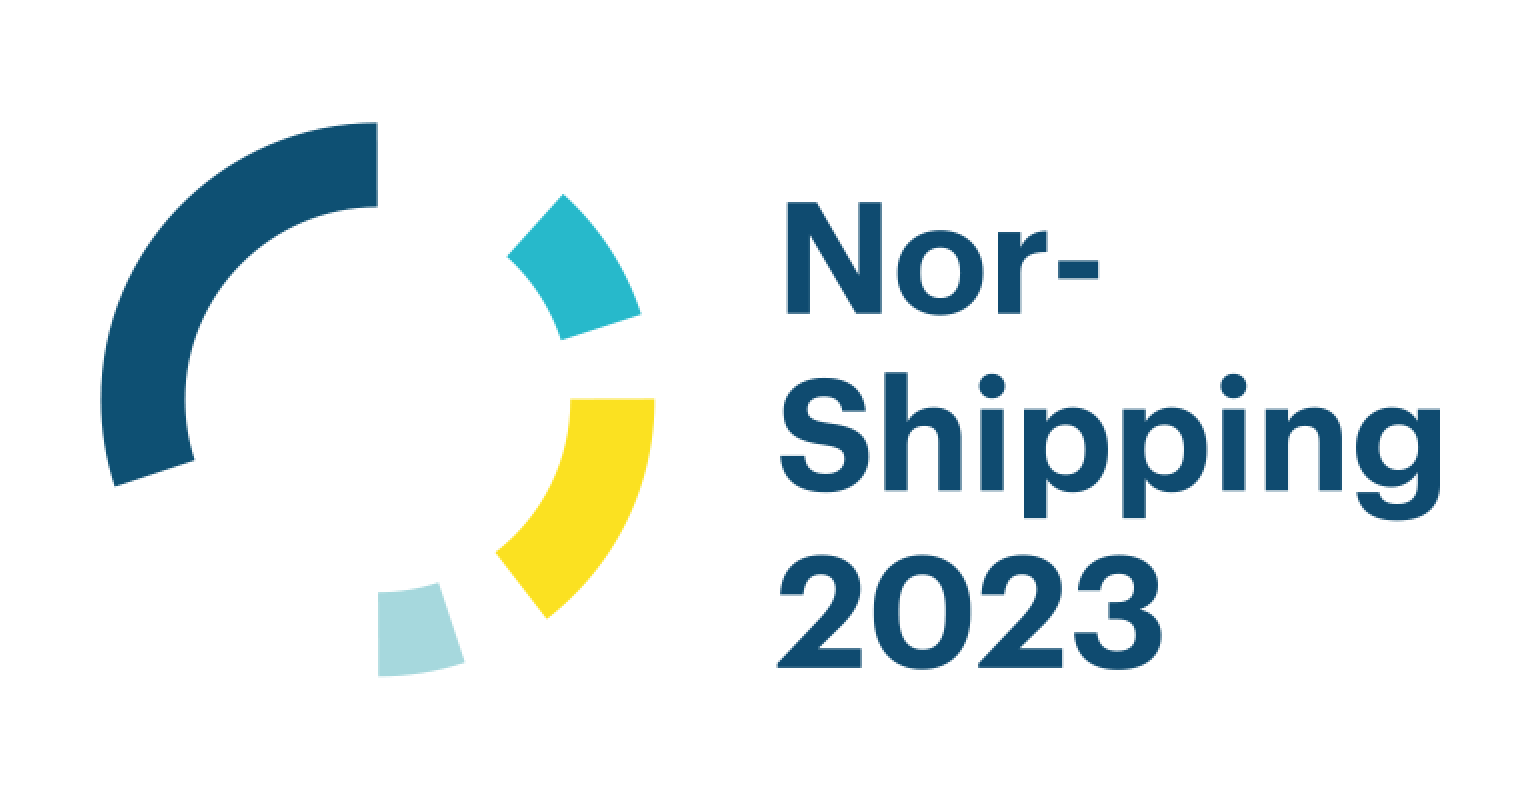 NorShipping 2023, Oslo, Norway Seatrade Maritime